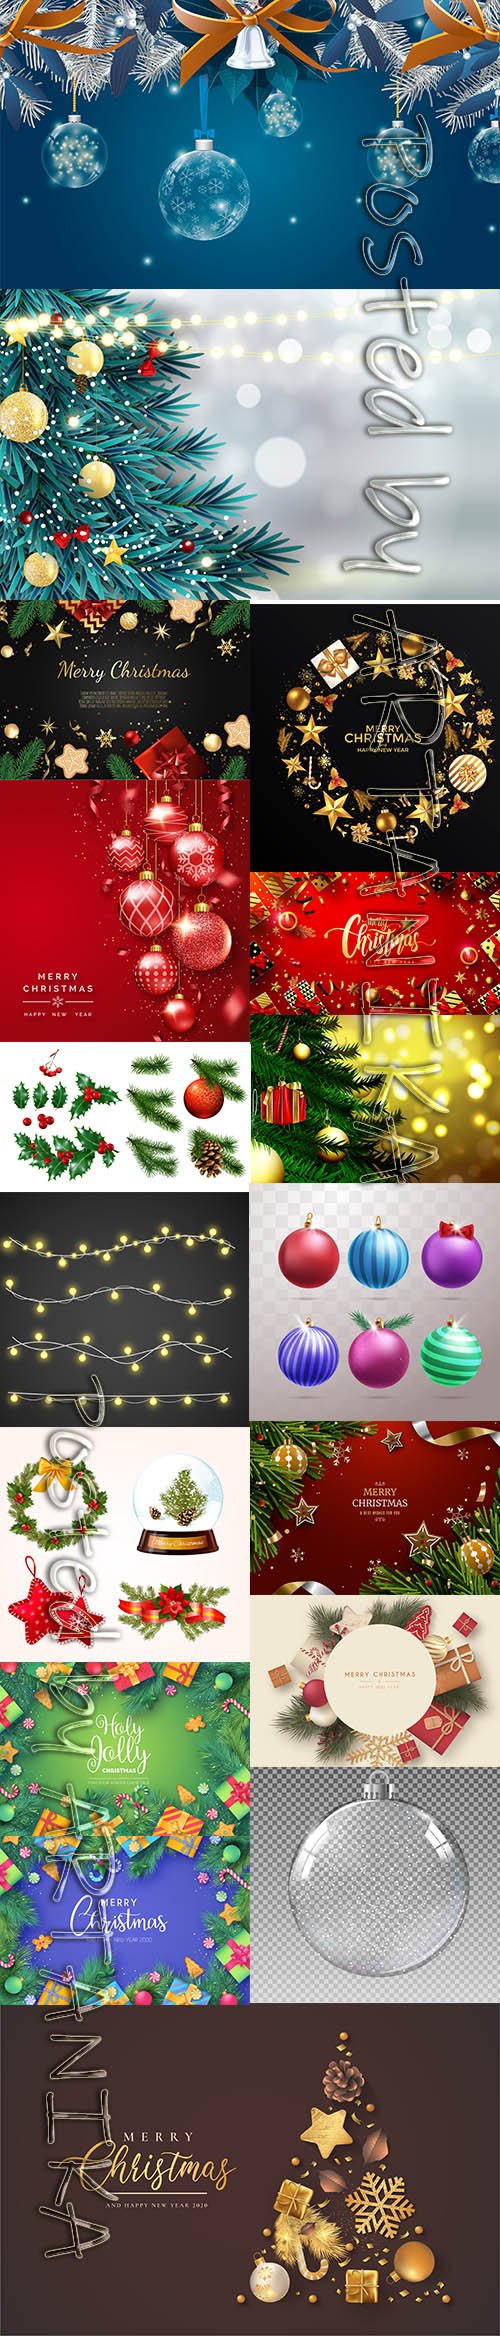 Big Set of Christmas Elegant Decorations and Backgrounds Vol 3